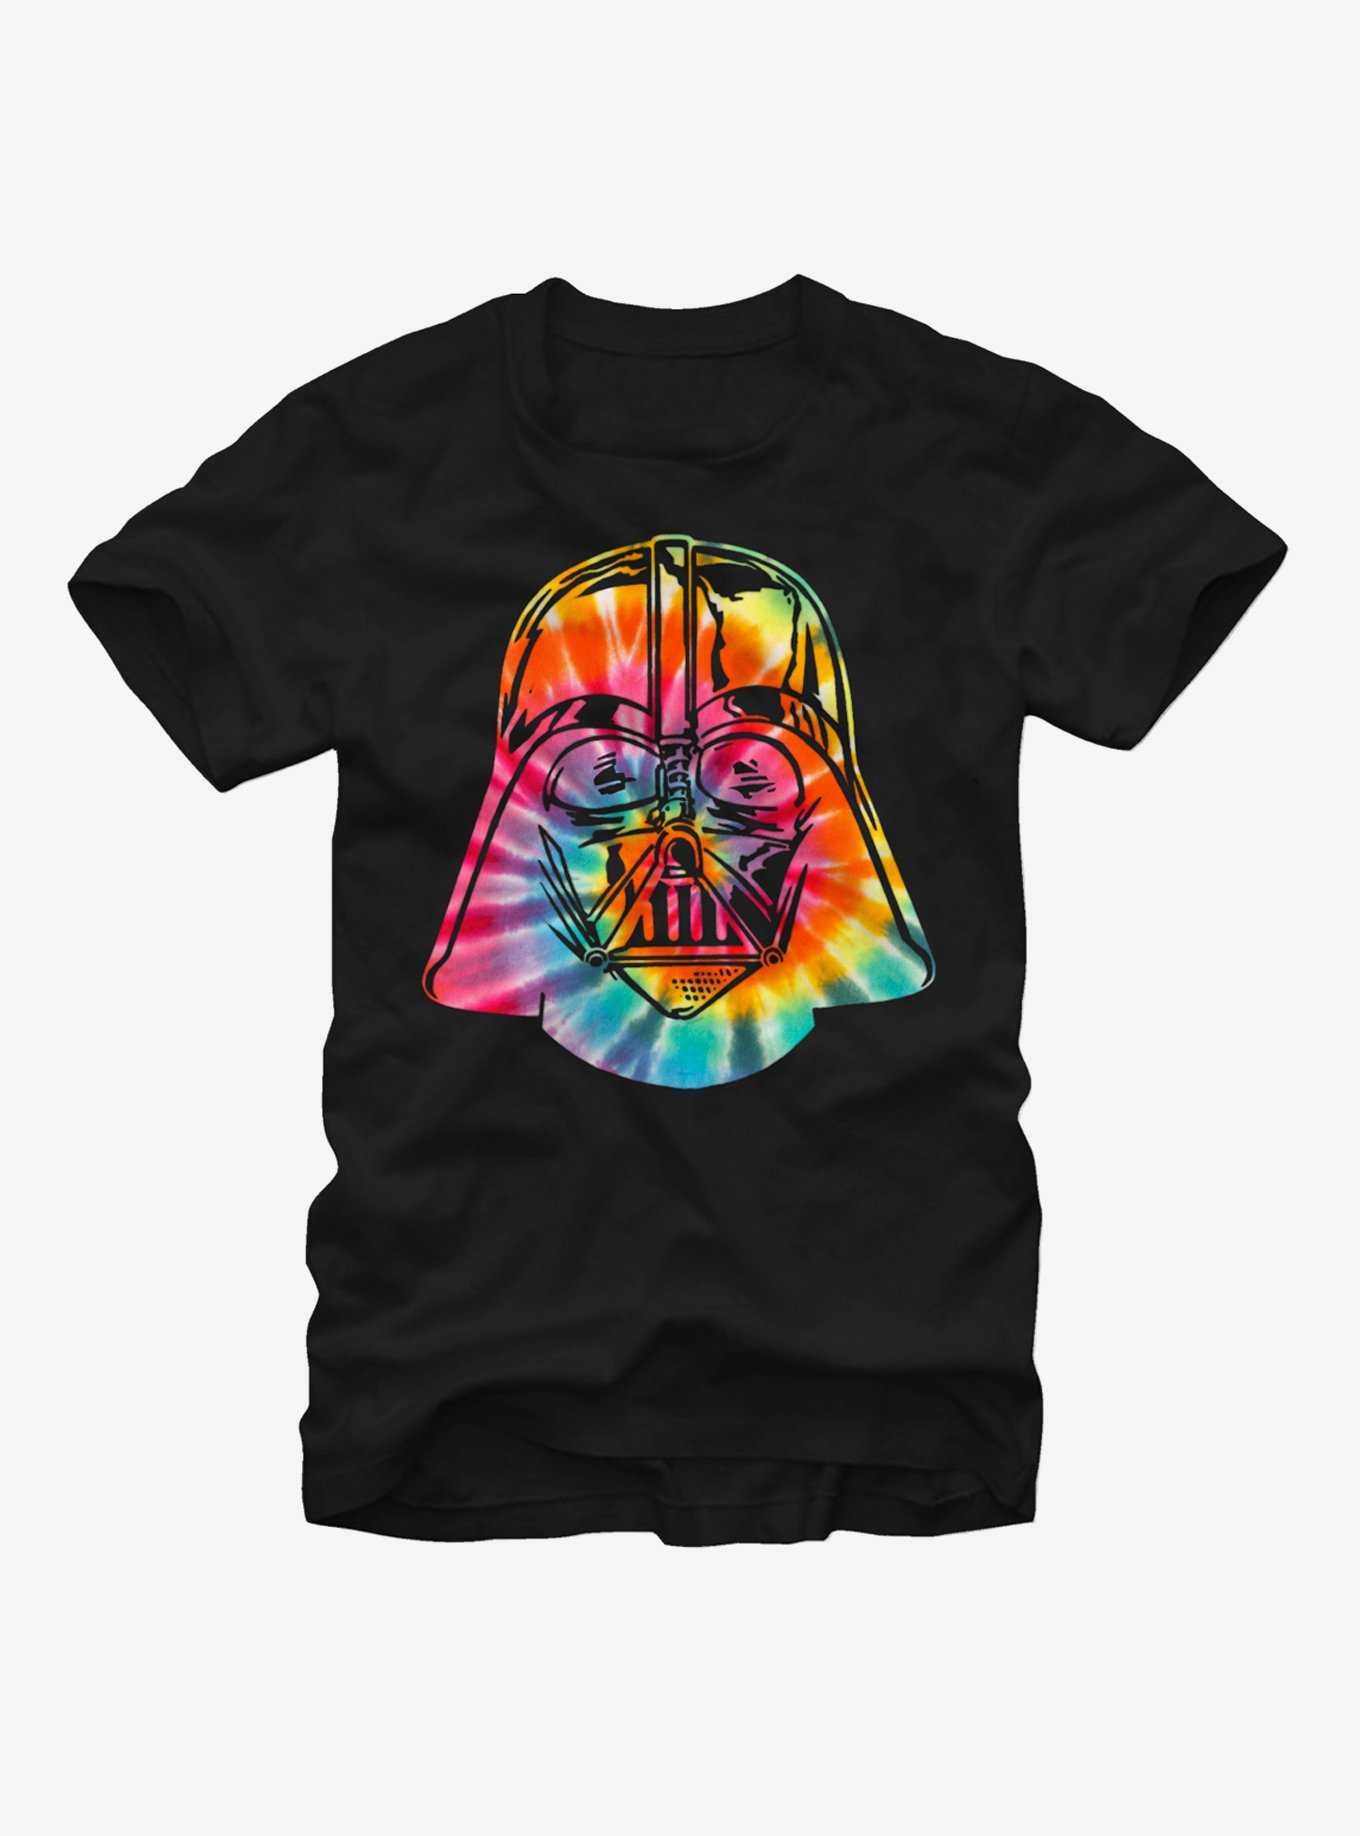 Star Wars Tie-Dye Darth Vader T-Shirt, , hi-res